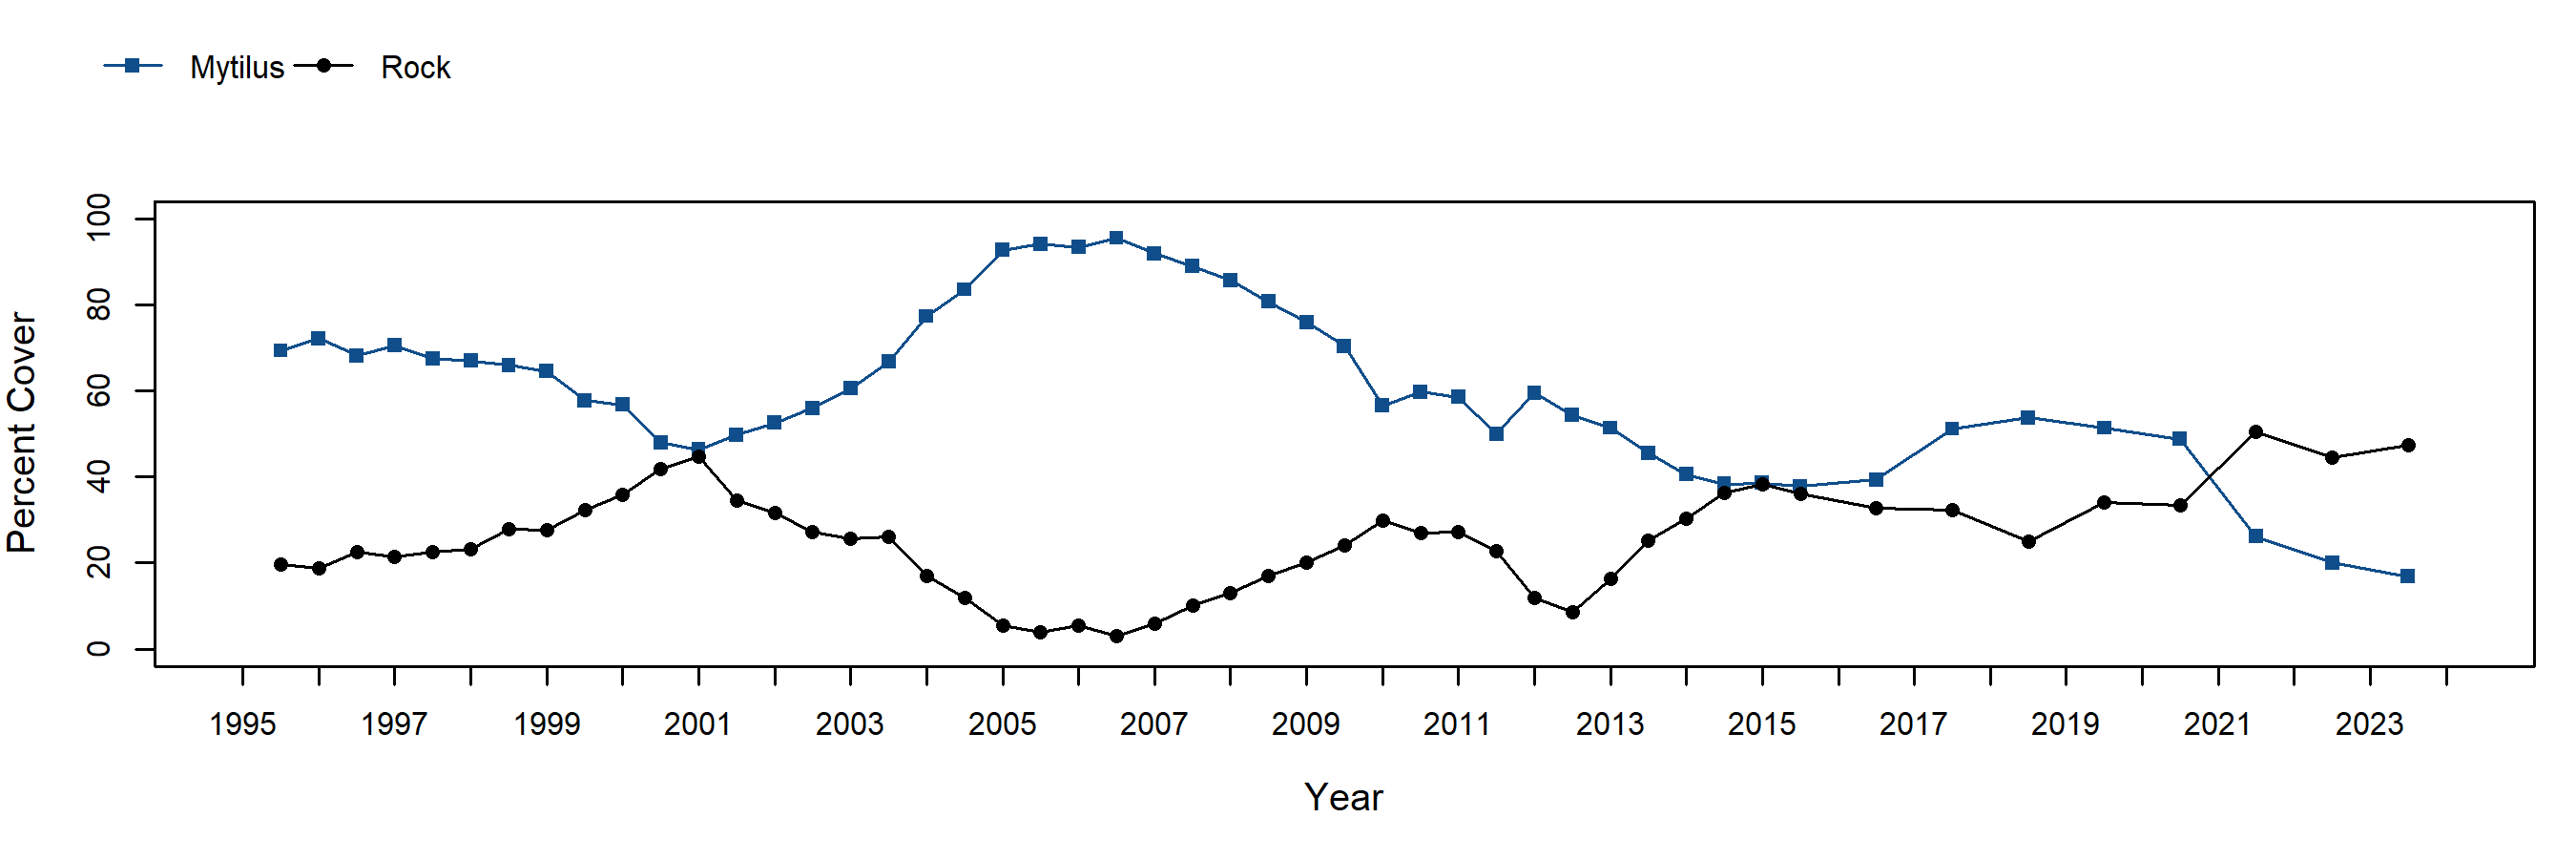 Cayucos Mytilus trend plot